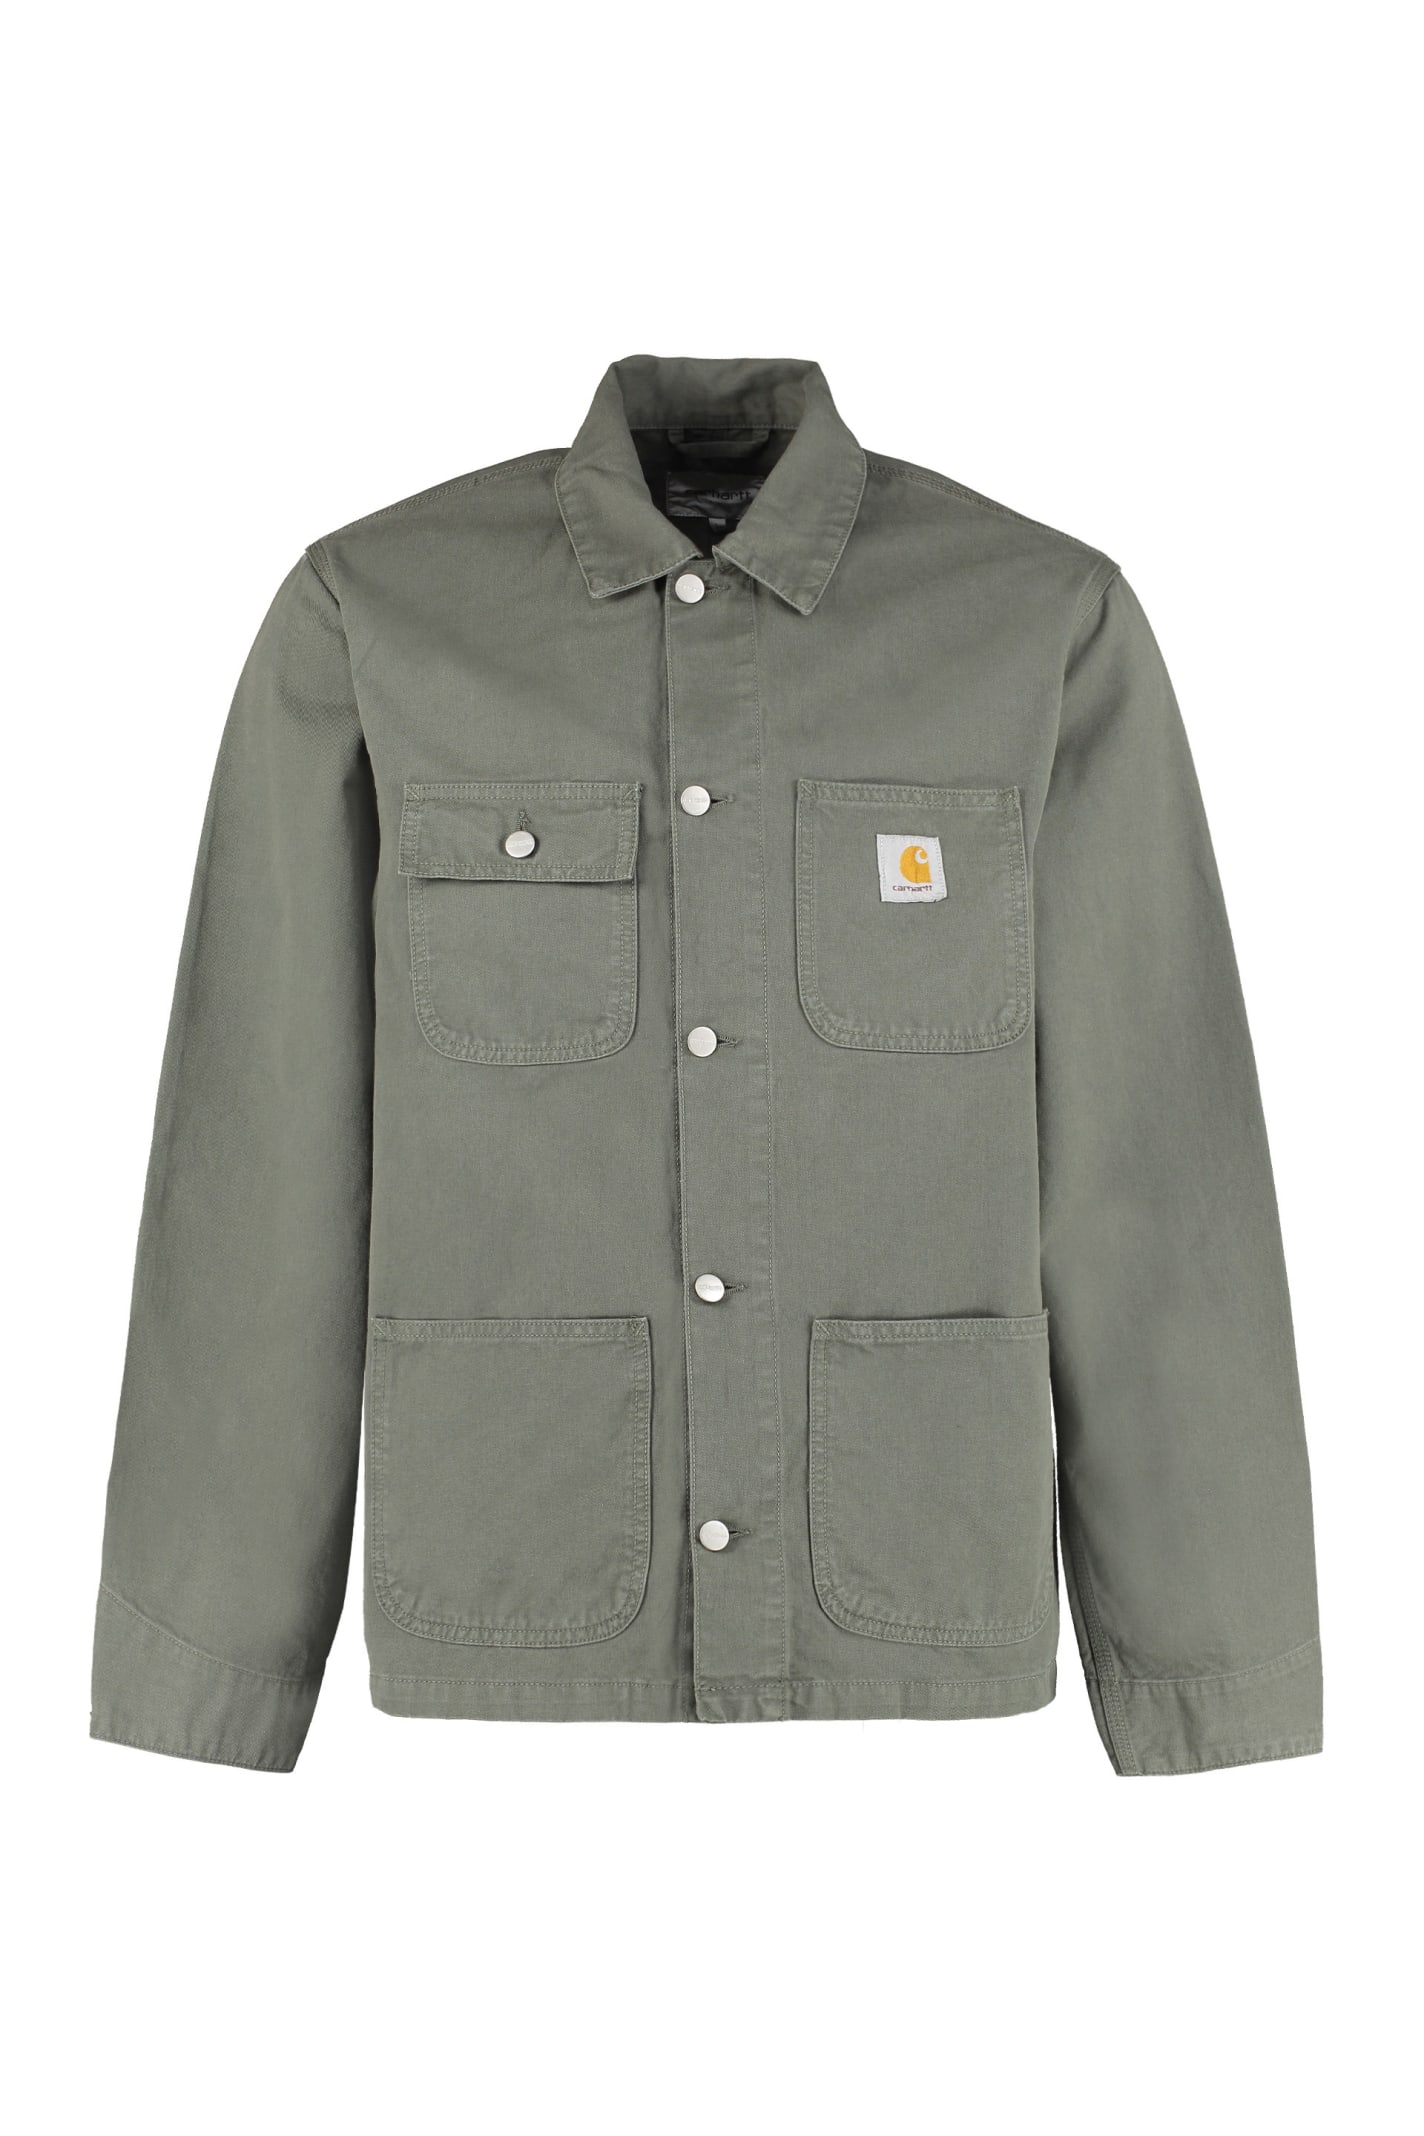 Carhartt Michigan Gabardine Cotton Jacket